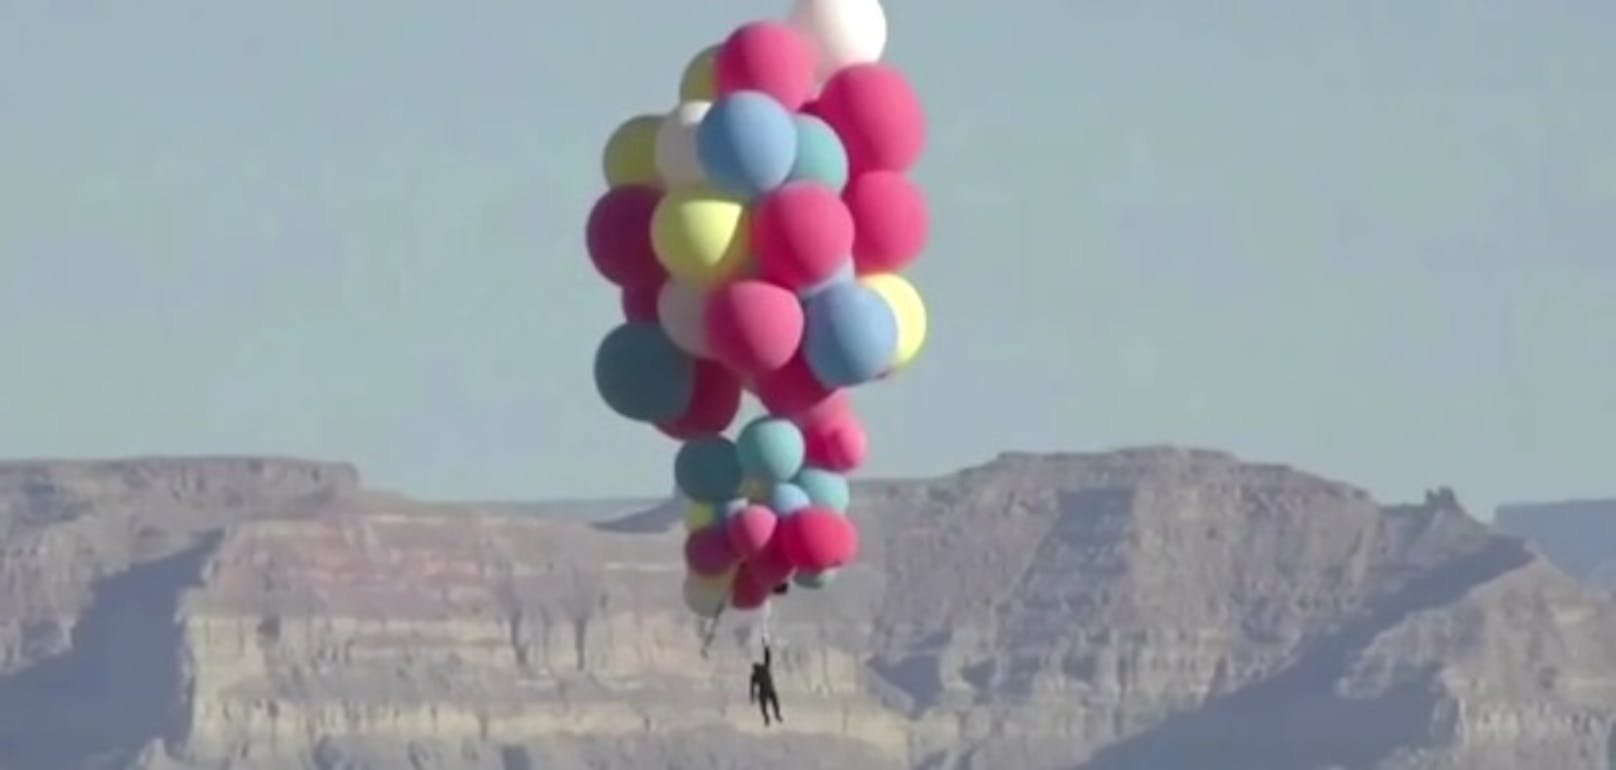 Mann fliegt mit 50 Heliumballons in 7600 Metern Höhe.<br>